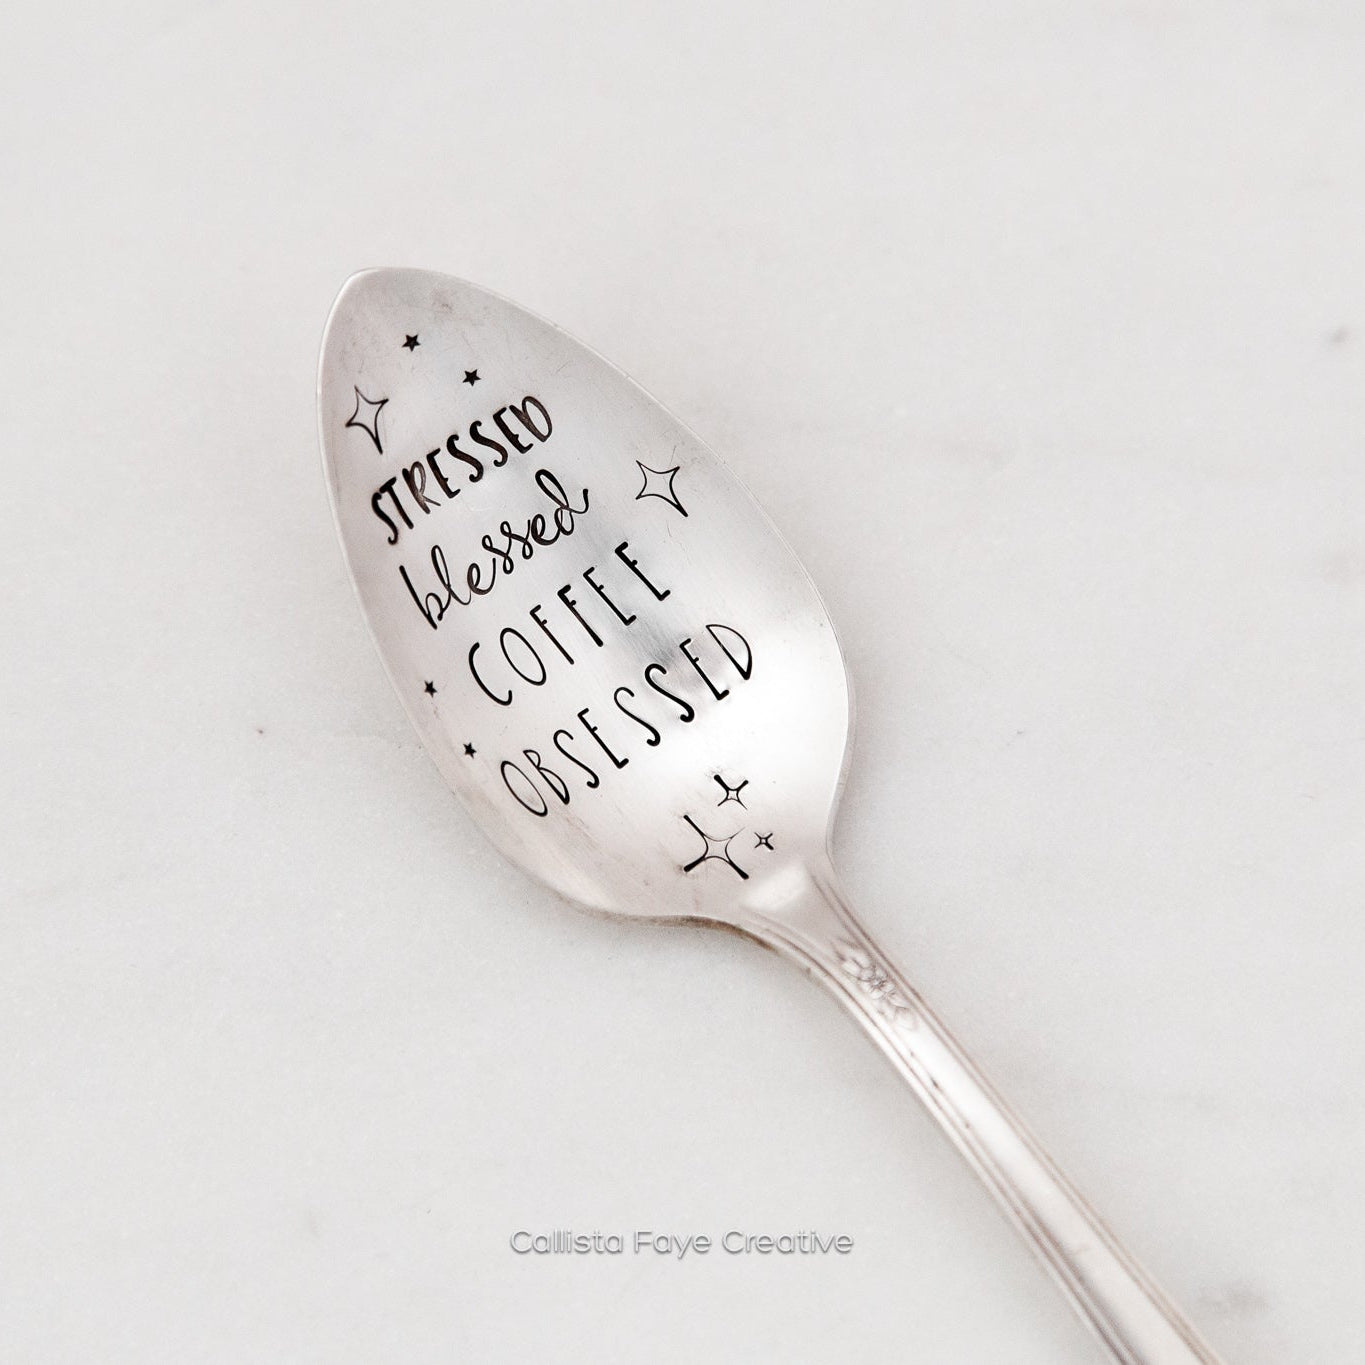 Stressed Blessed Coffee Obsessed, Hand Stamped Vintage Spoon Spoons callistafaye   